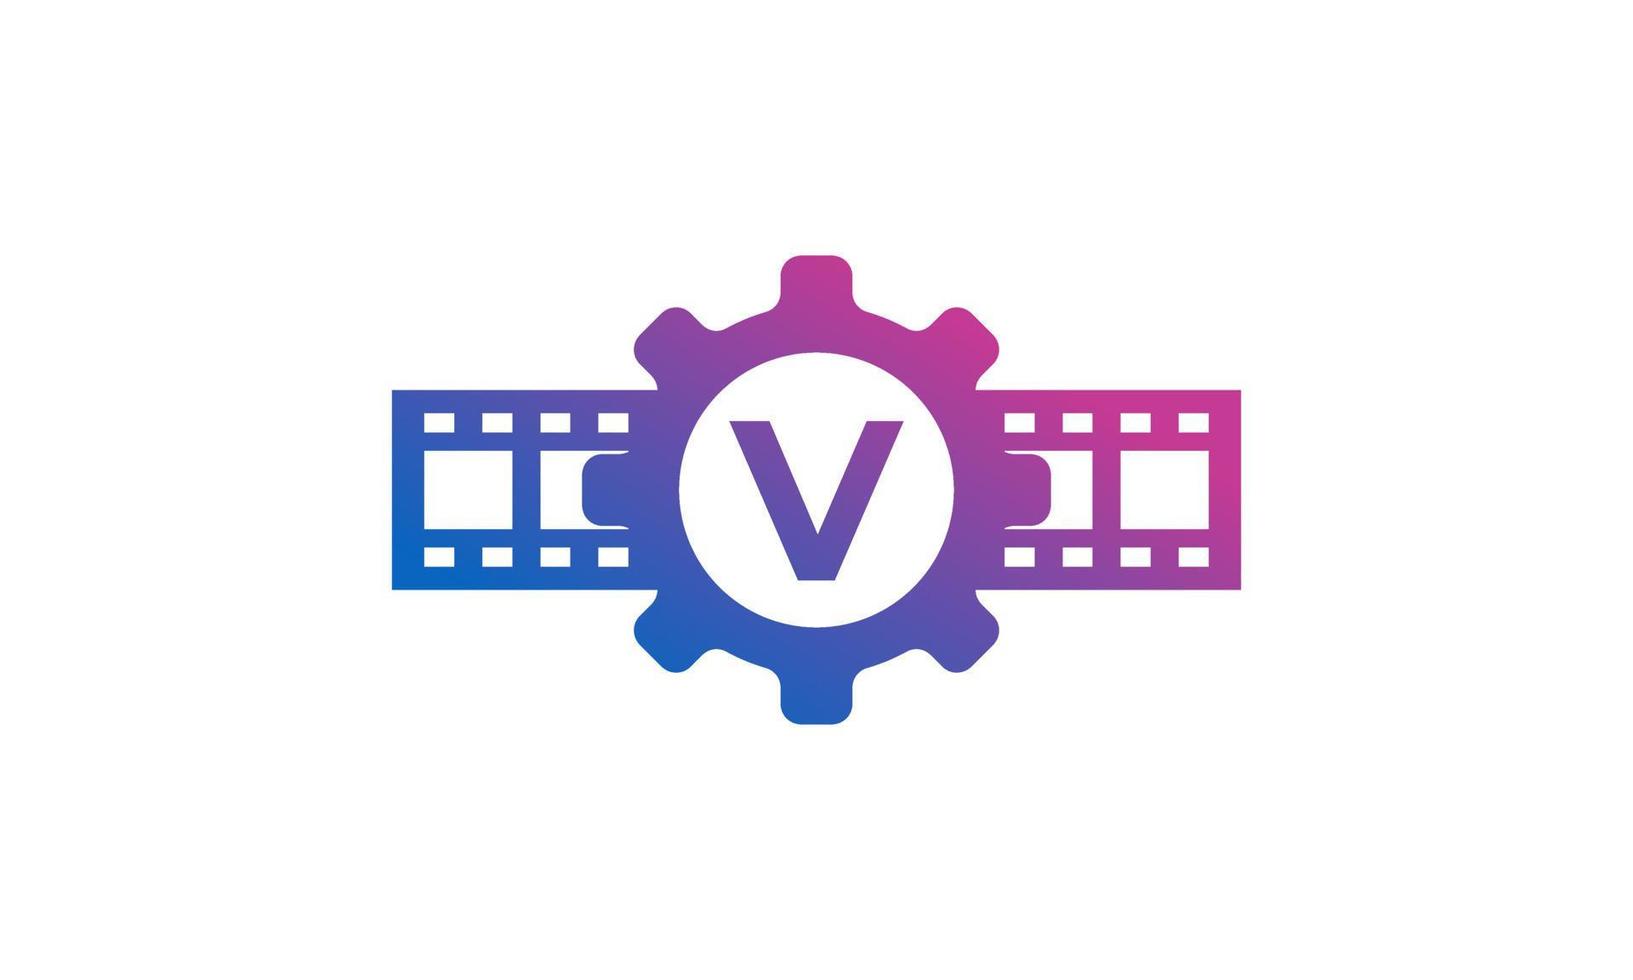 letra inicial v engranaje rueda dentada con rayas de carrete tira de película para película cine producción estudio logotipo inspiración vector